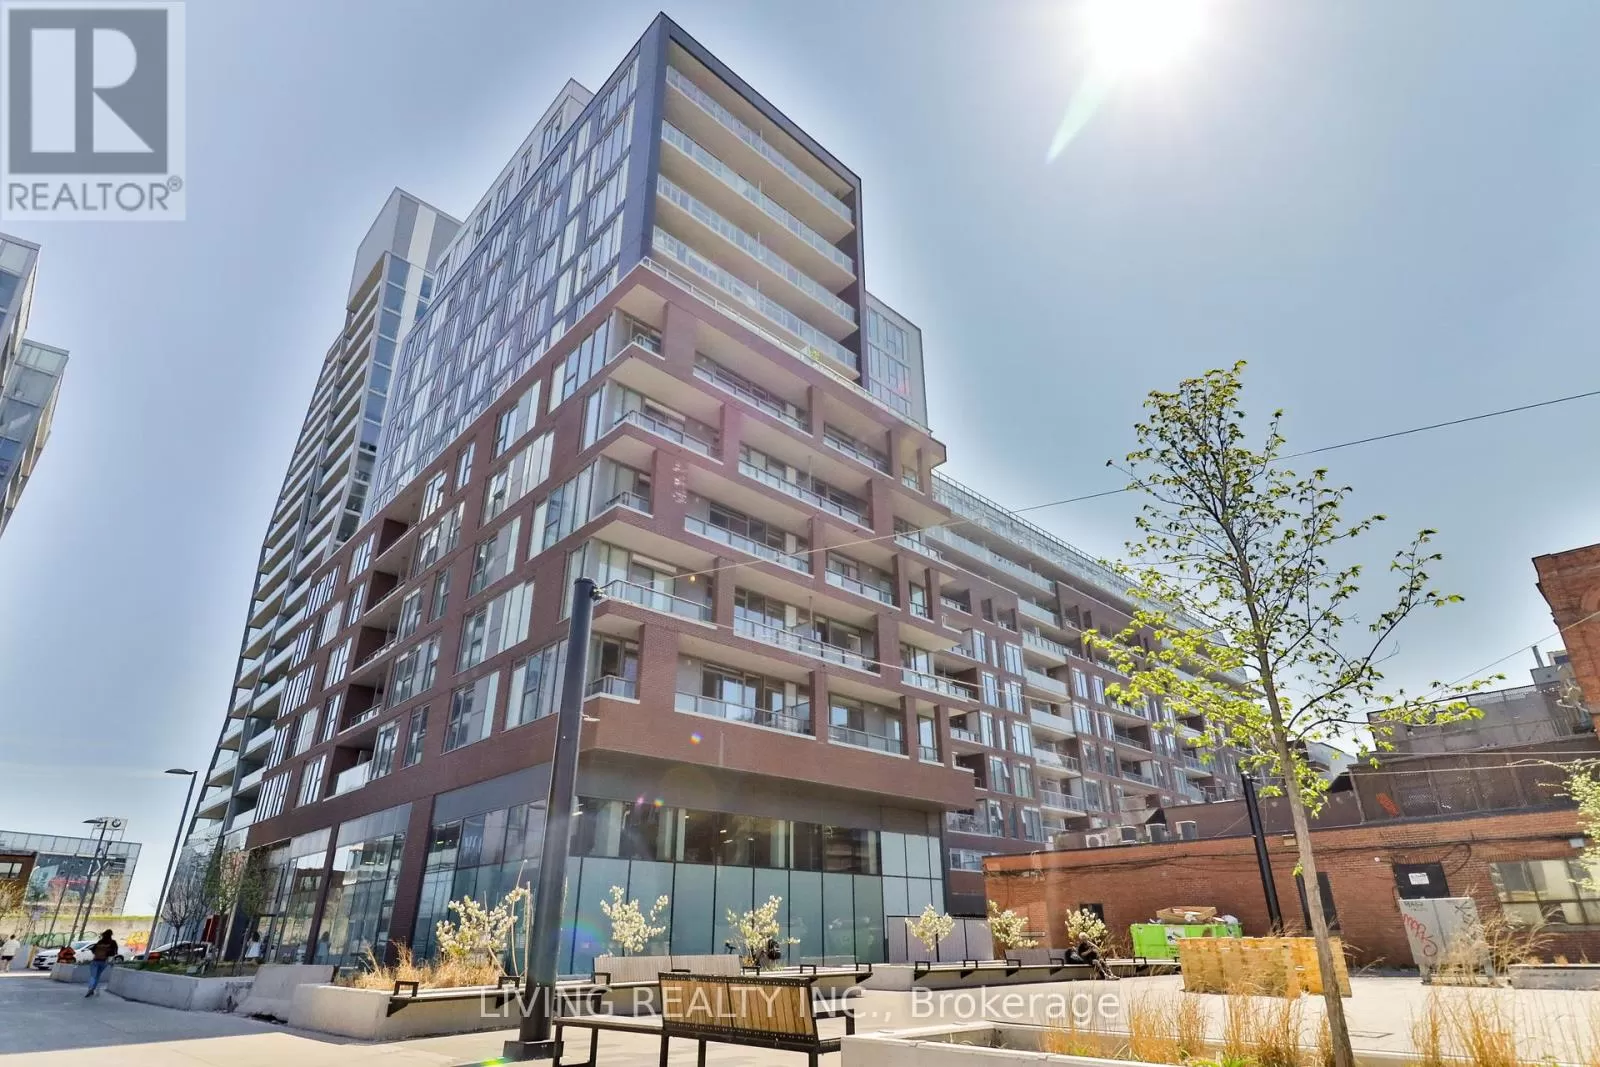 Apartment for rent: 424 - 30 Baseball Place, Toronto, Ontario M4M 0E8